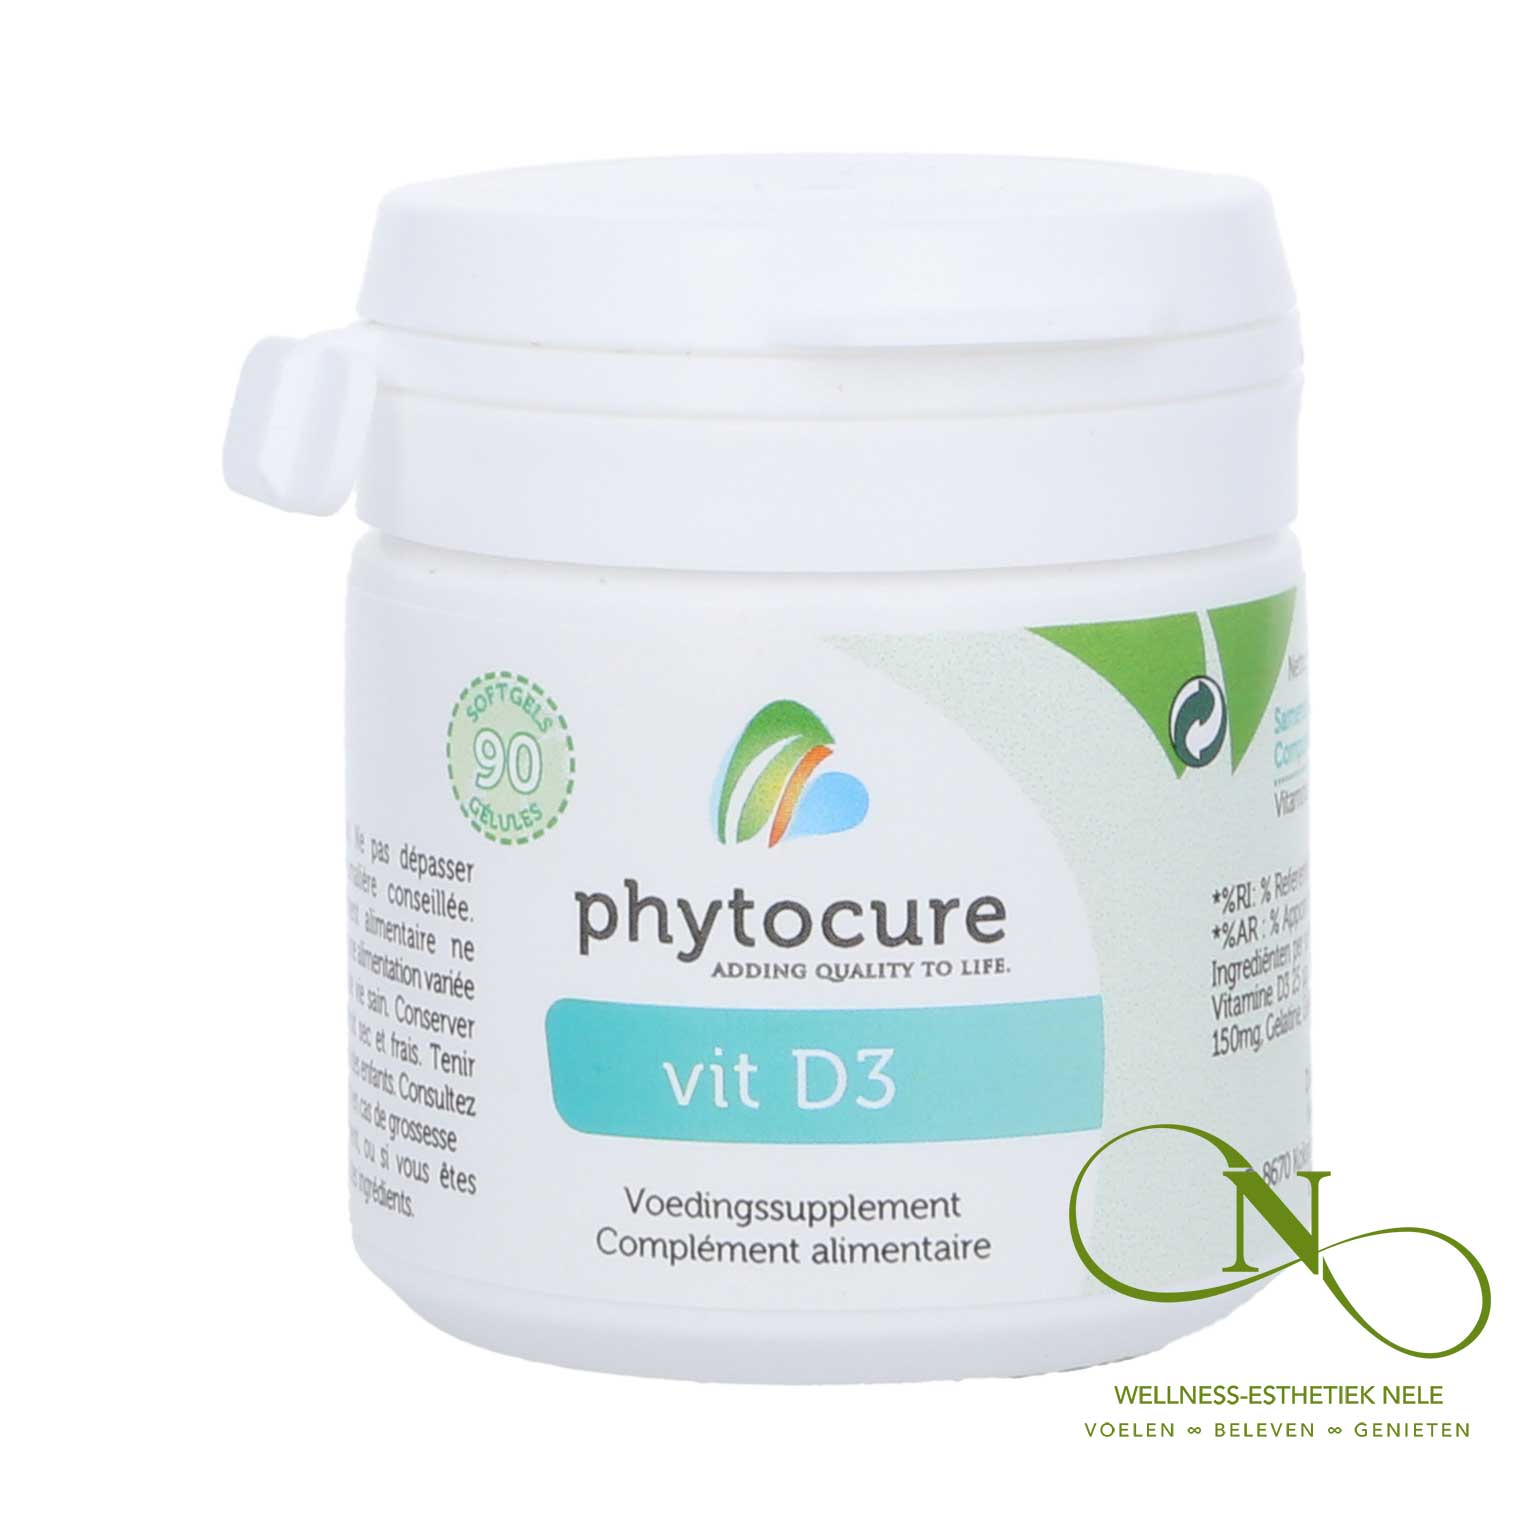 Phytocure Vitamine D3 Wellness-Esthetiek Nele